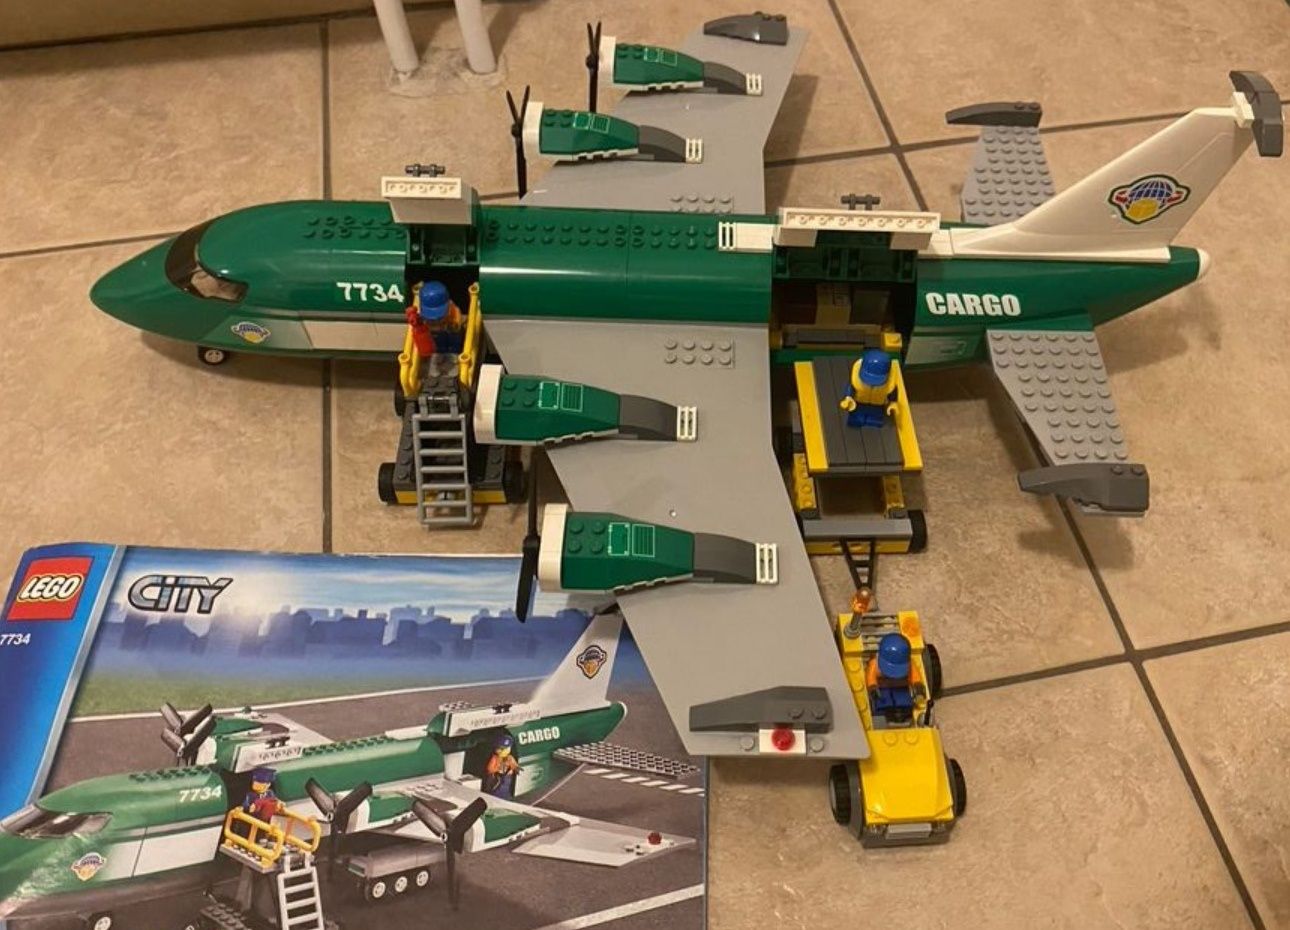 LEGO City Cargo Plane 7734